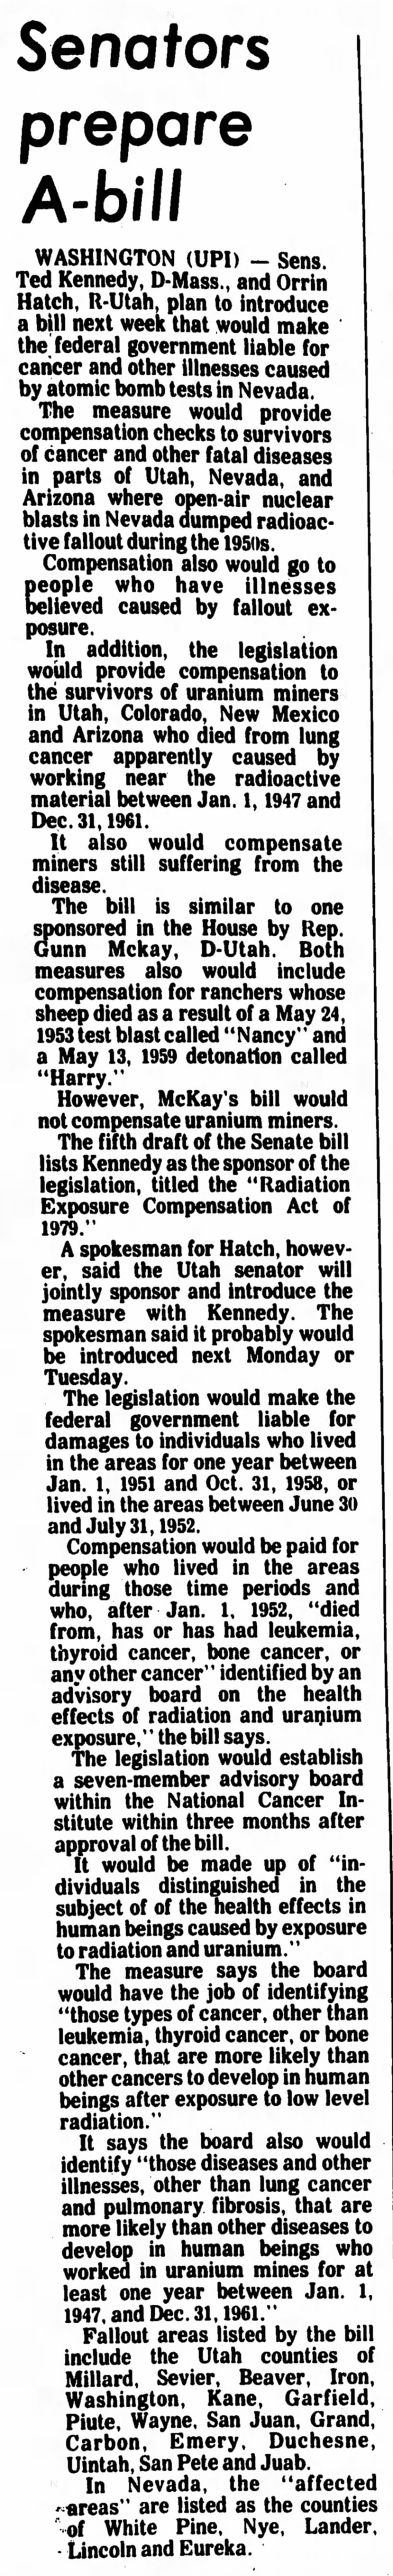 Senators prepare fifth draft of Radiation Exposure Compensation Act (1979)